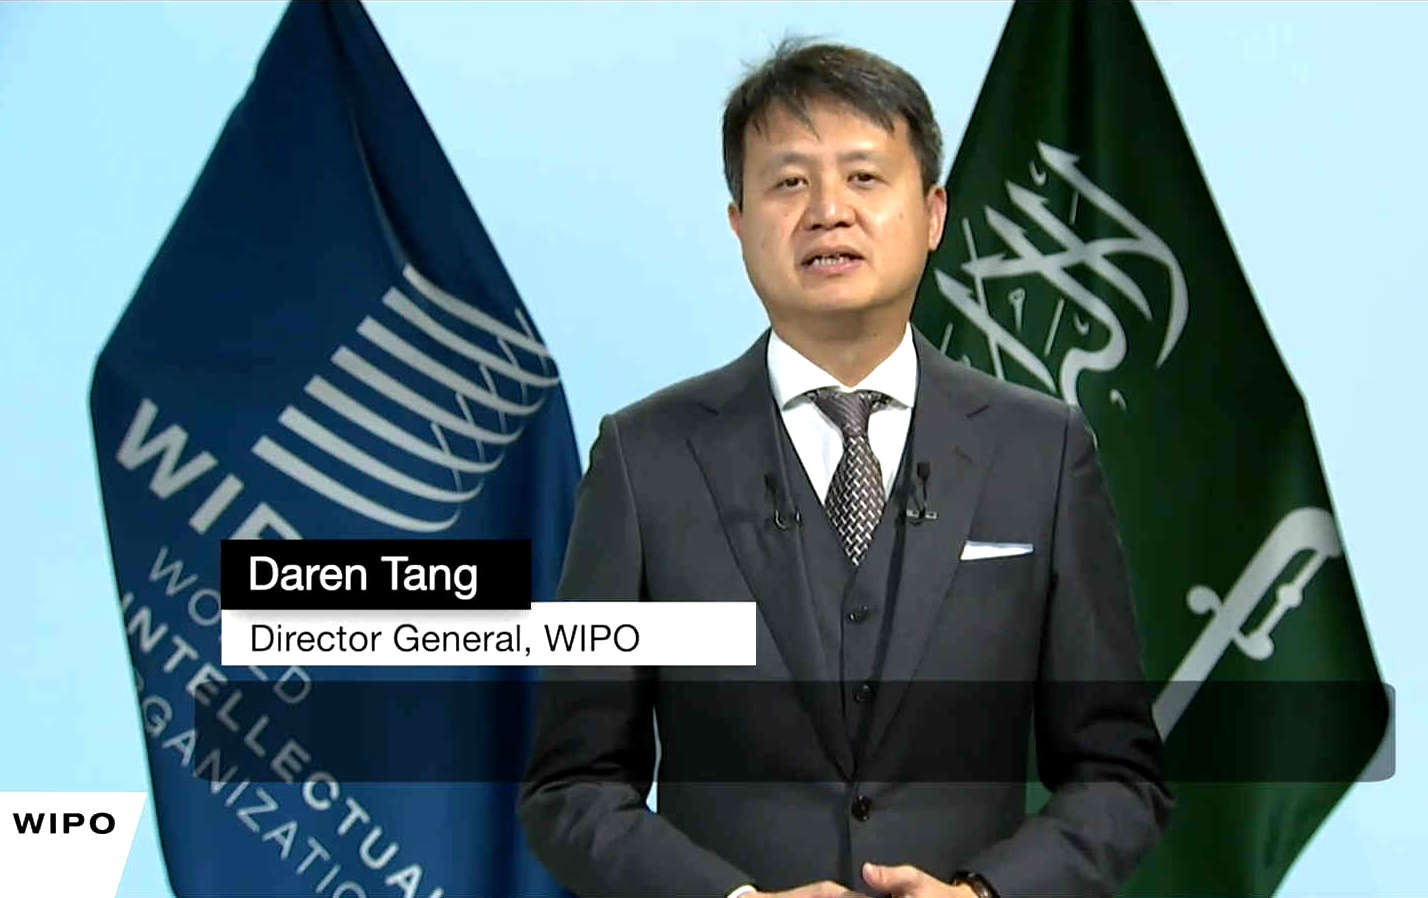 Daren Tang, Director General of the World Intellectual Property Organization